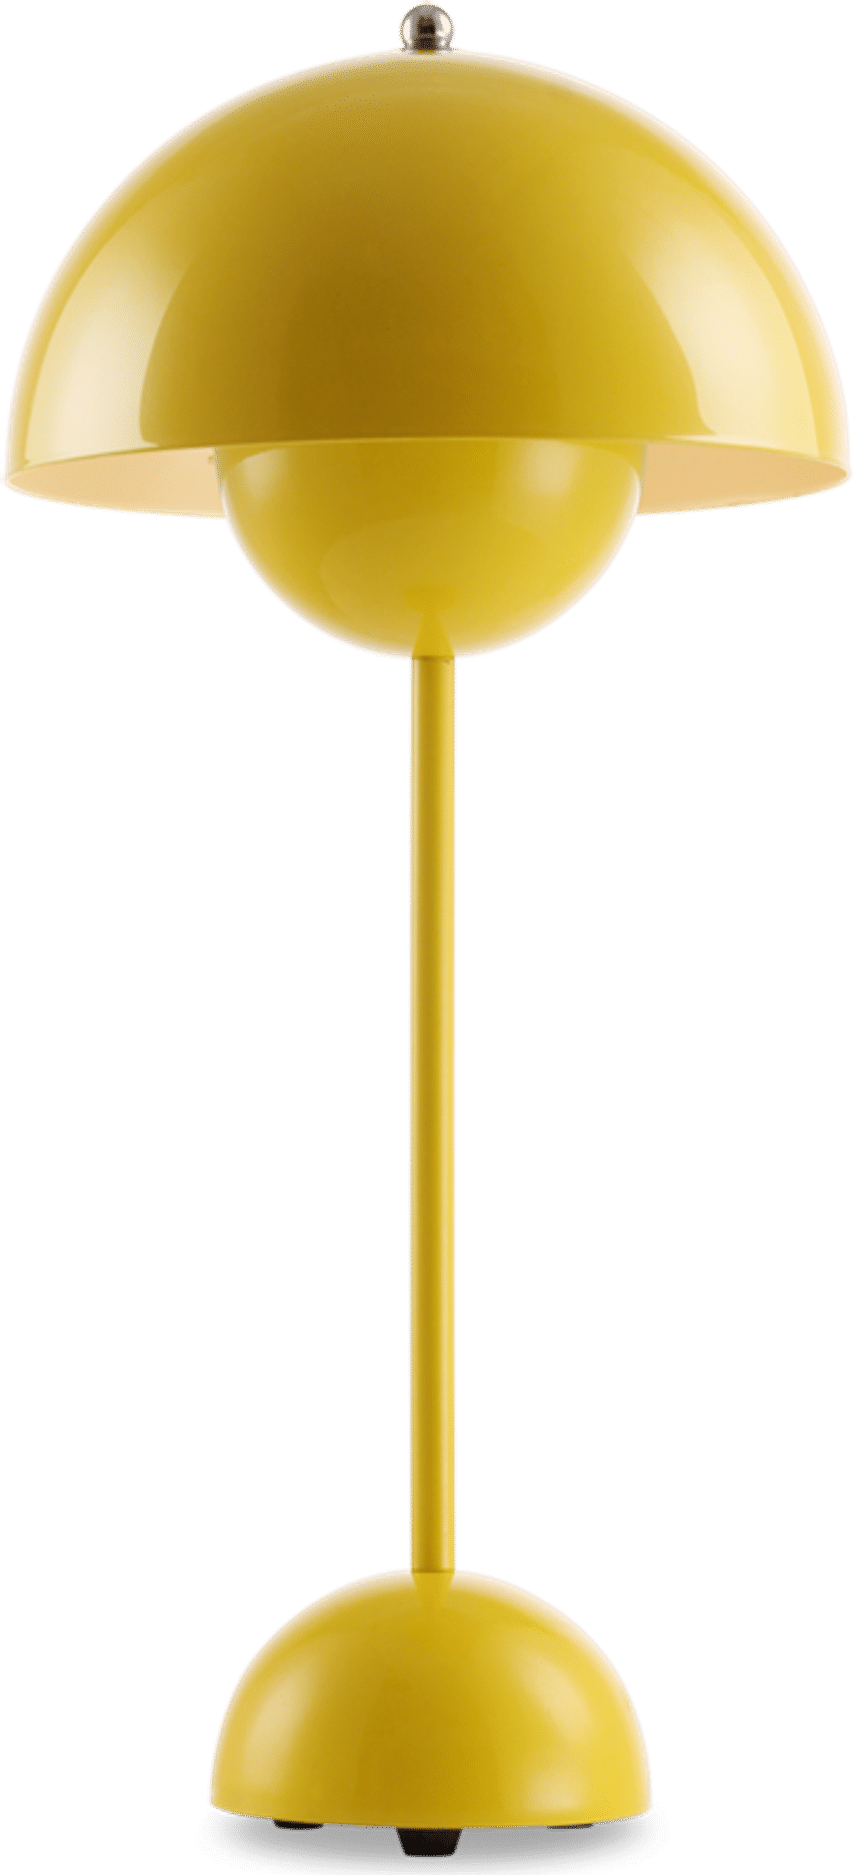 Tischlampe im Blumentopf-Stil Yellow image.